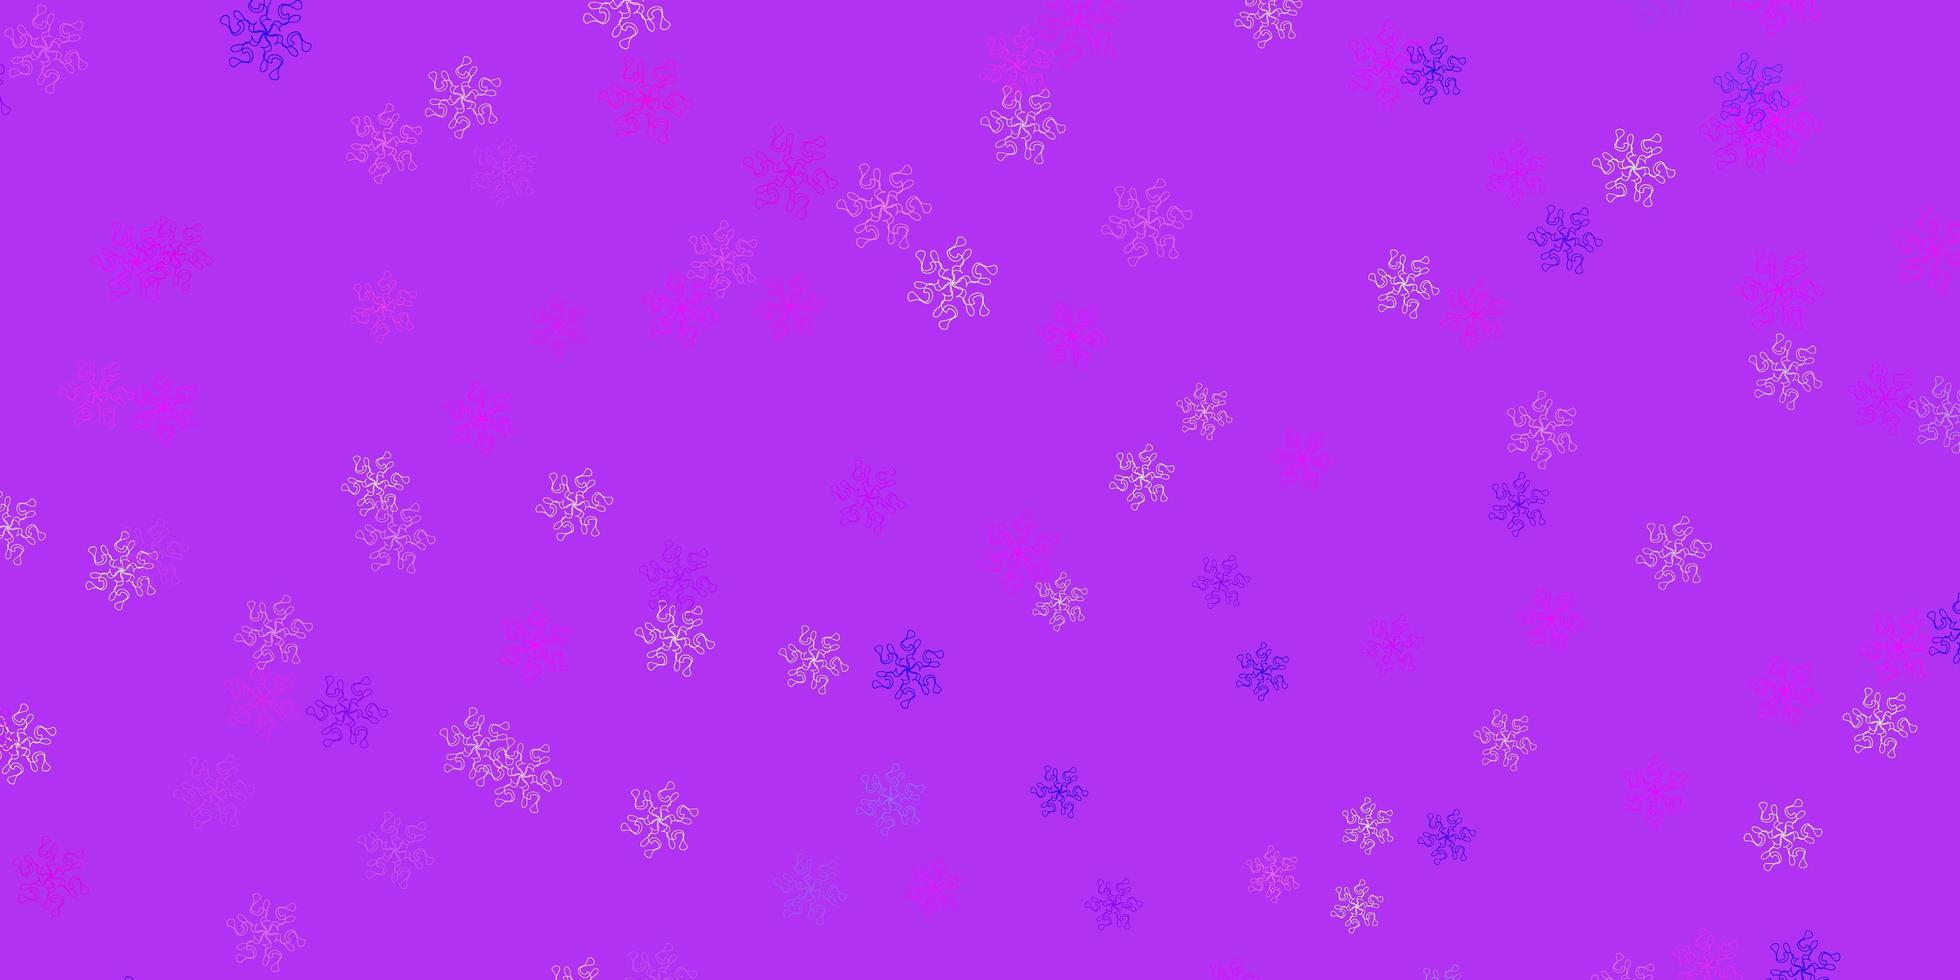 Plantilla de doodle de vector púrpura claro, rosa con flores.